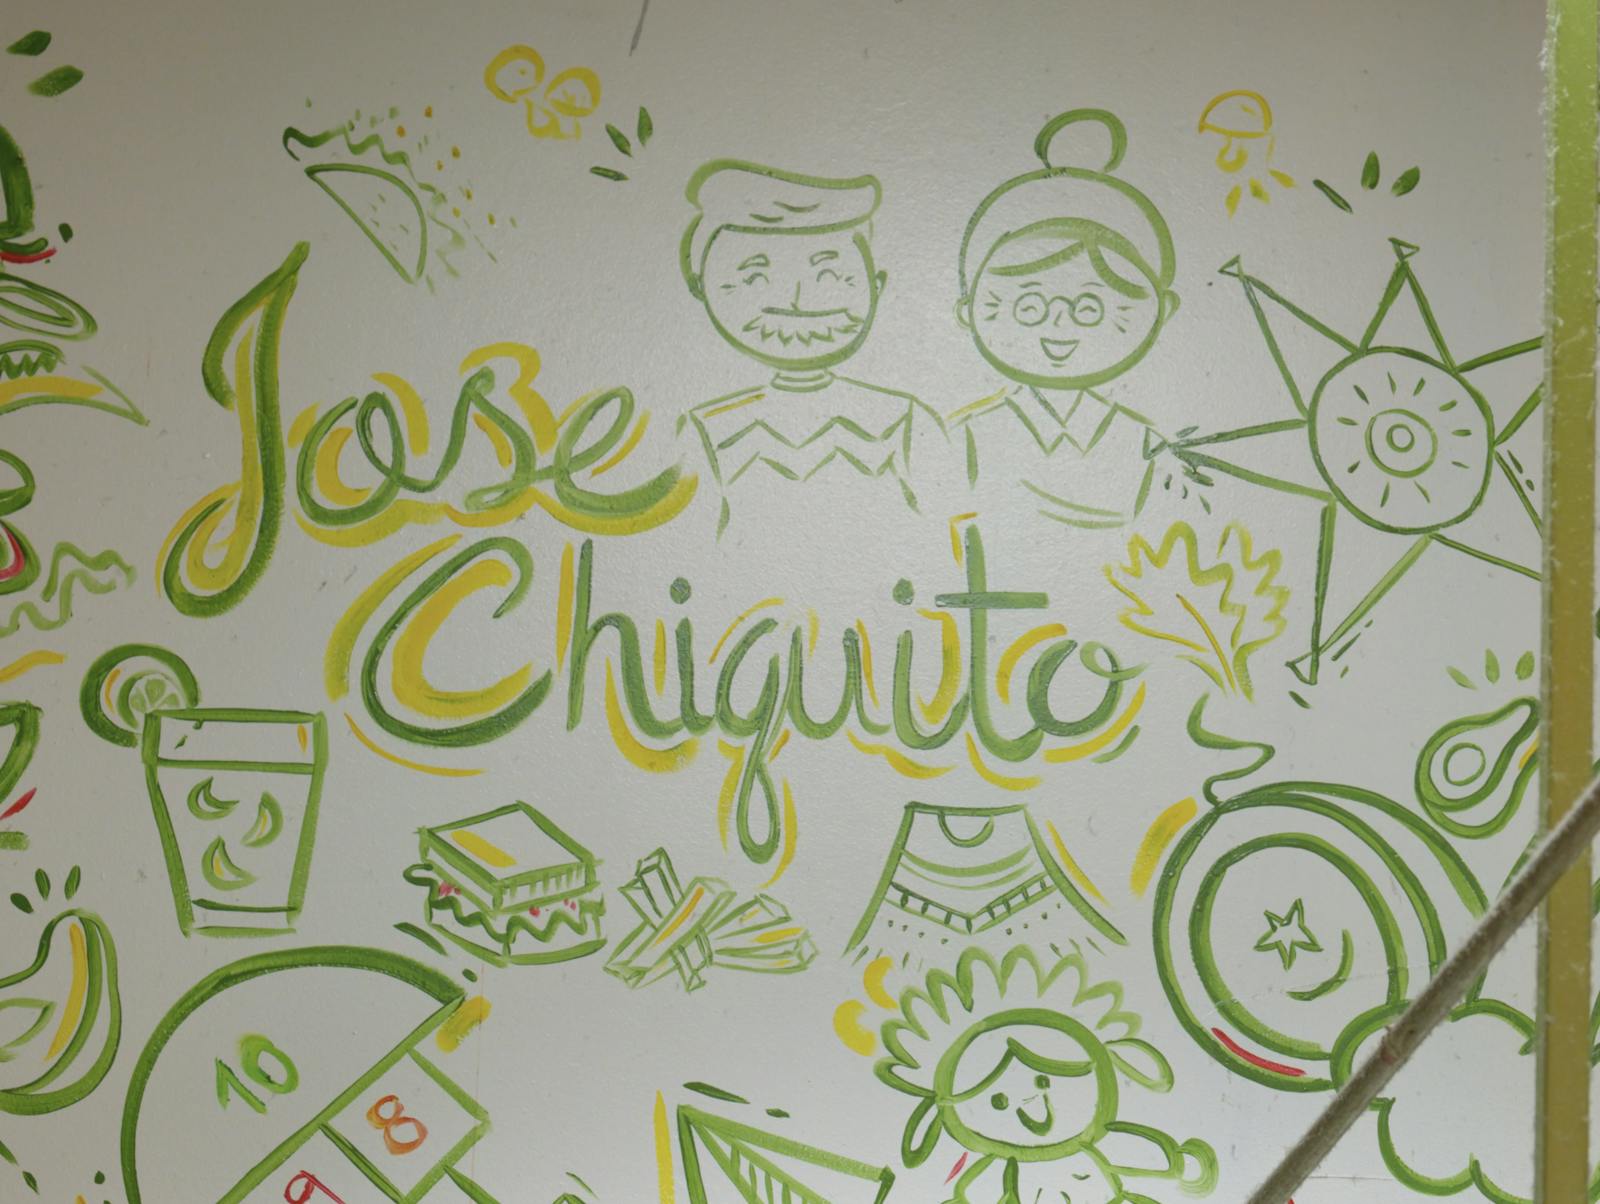 An interior shot of Jose Chiquito's restaurant. 